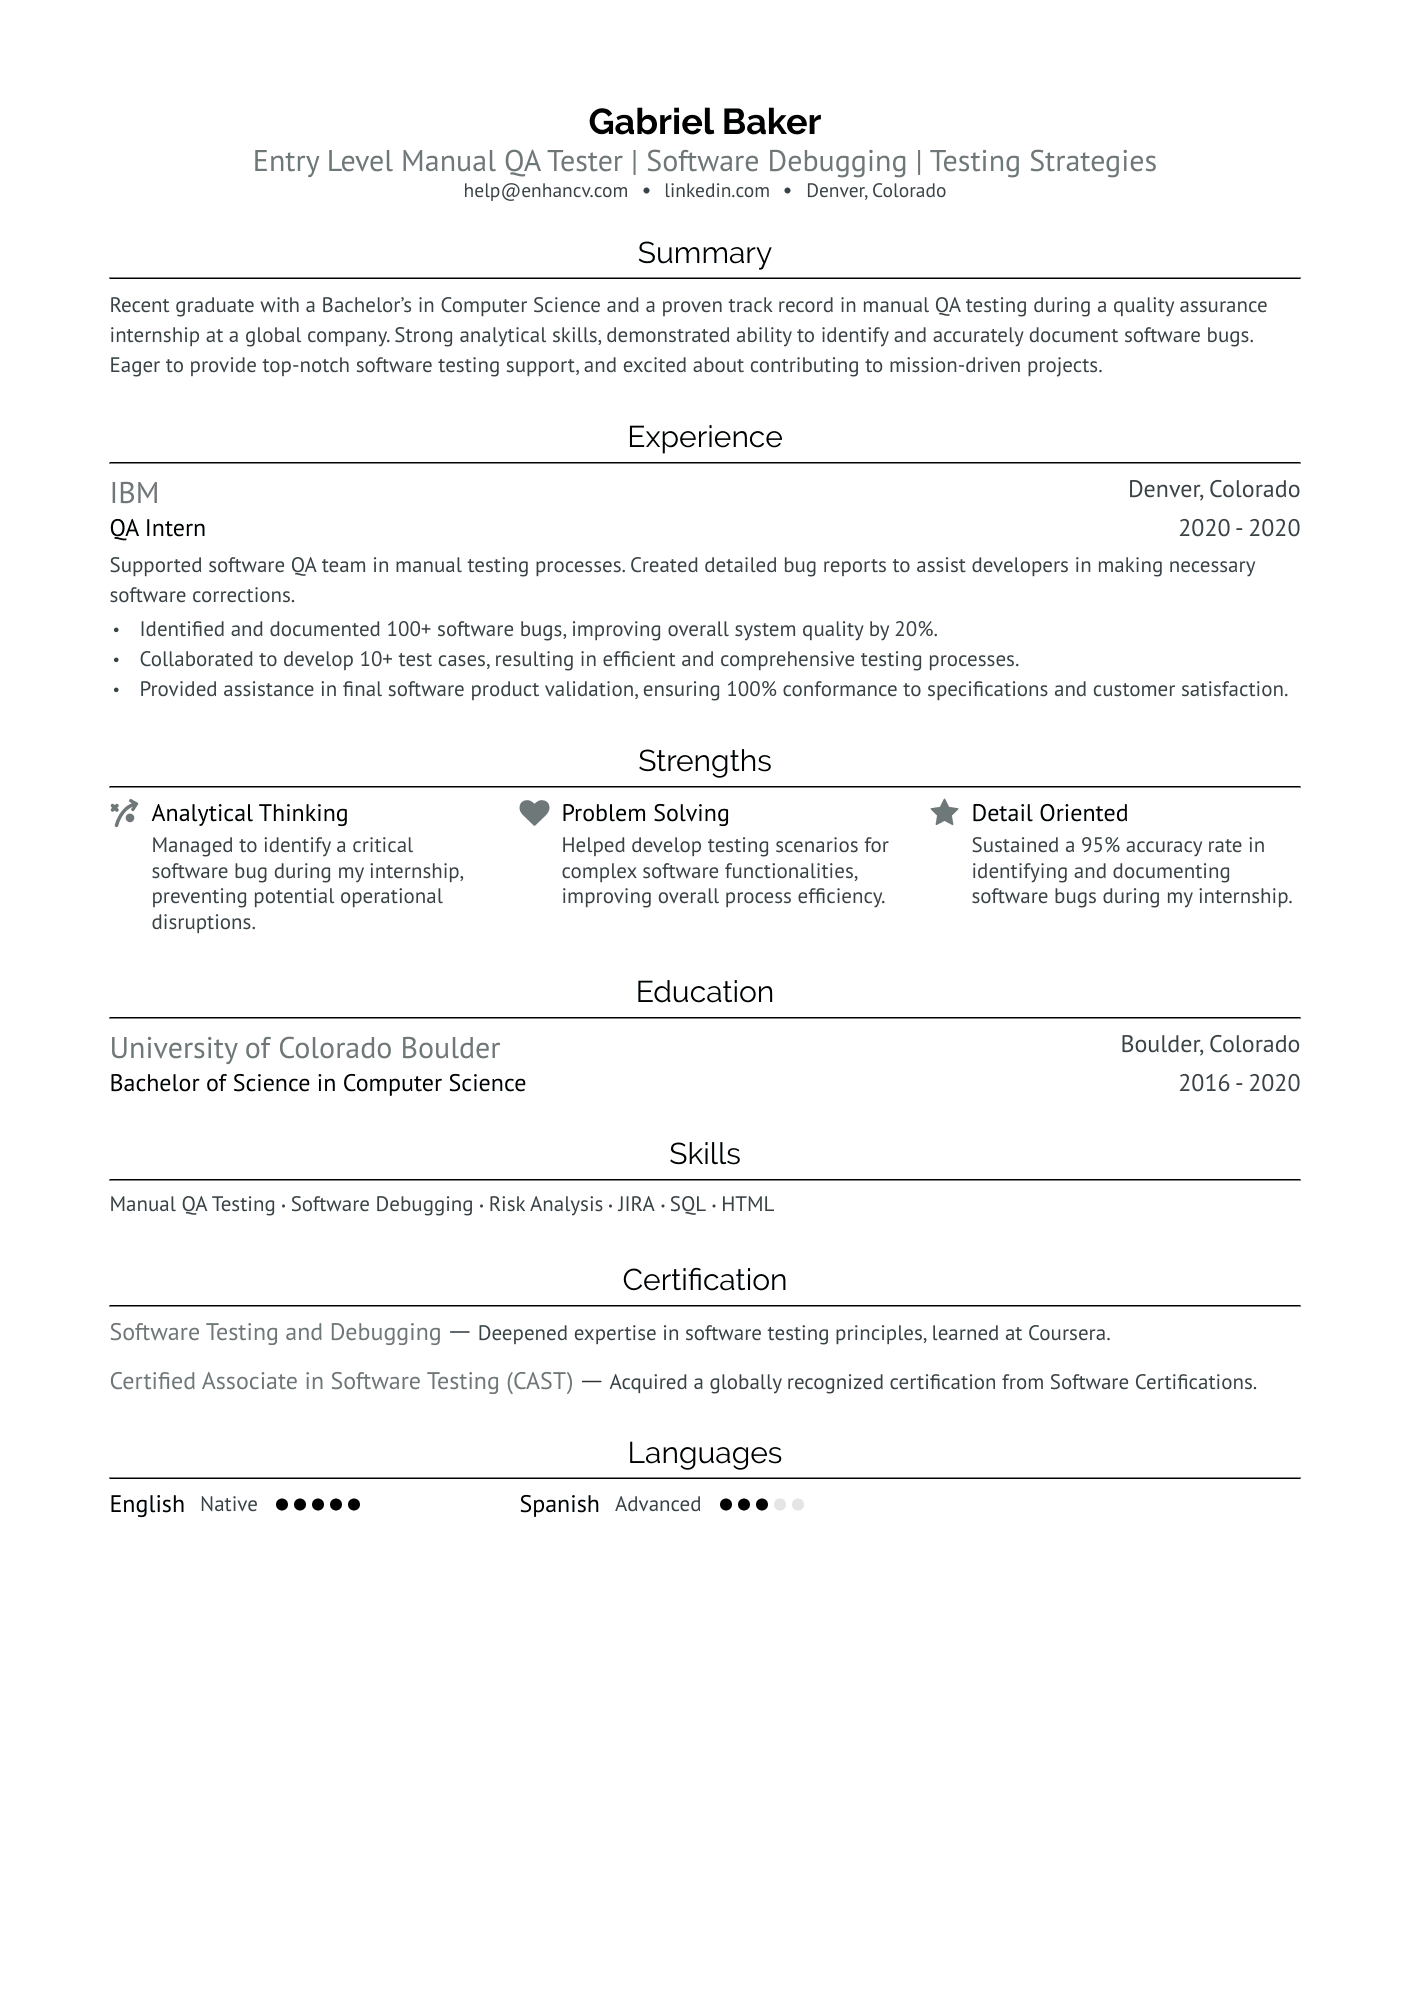 Entry Level Manual QA Tester Resume Example